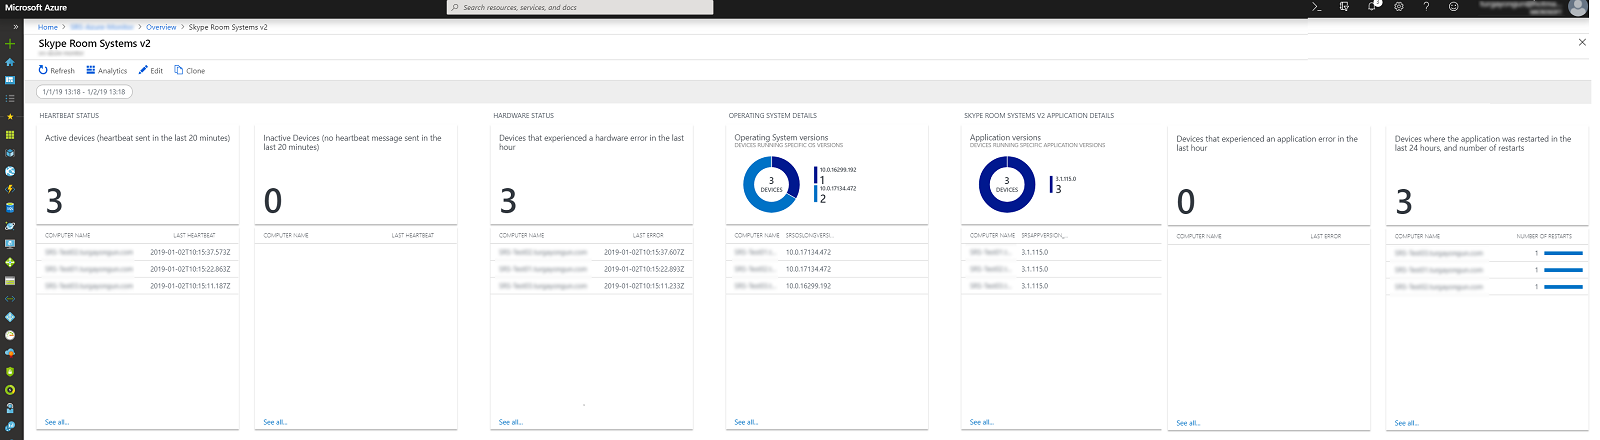 Screenshot of sample Log Analytics view for Microsoft Teams Rooms.